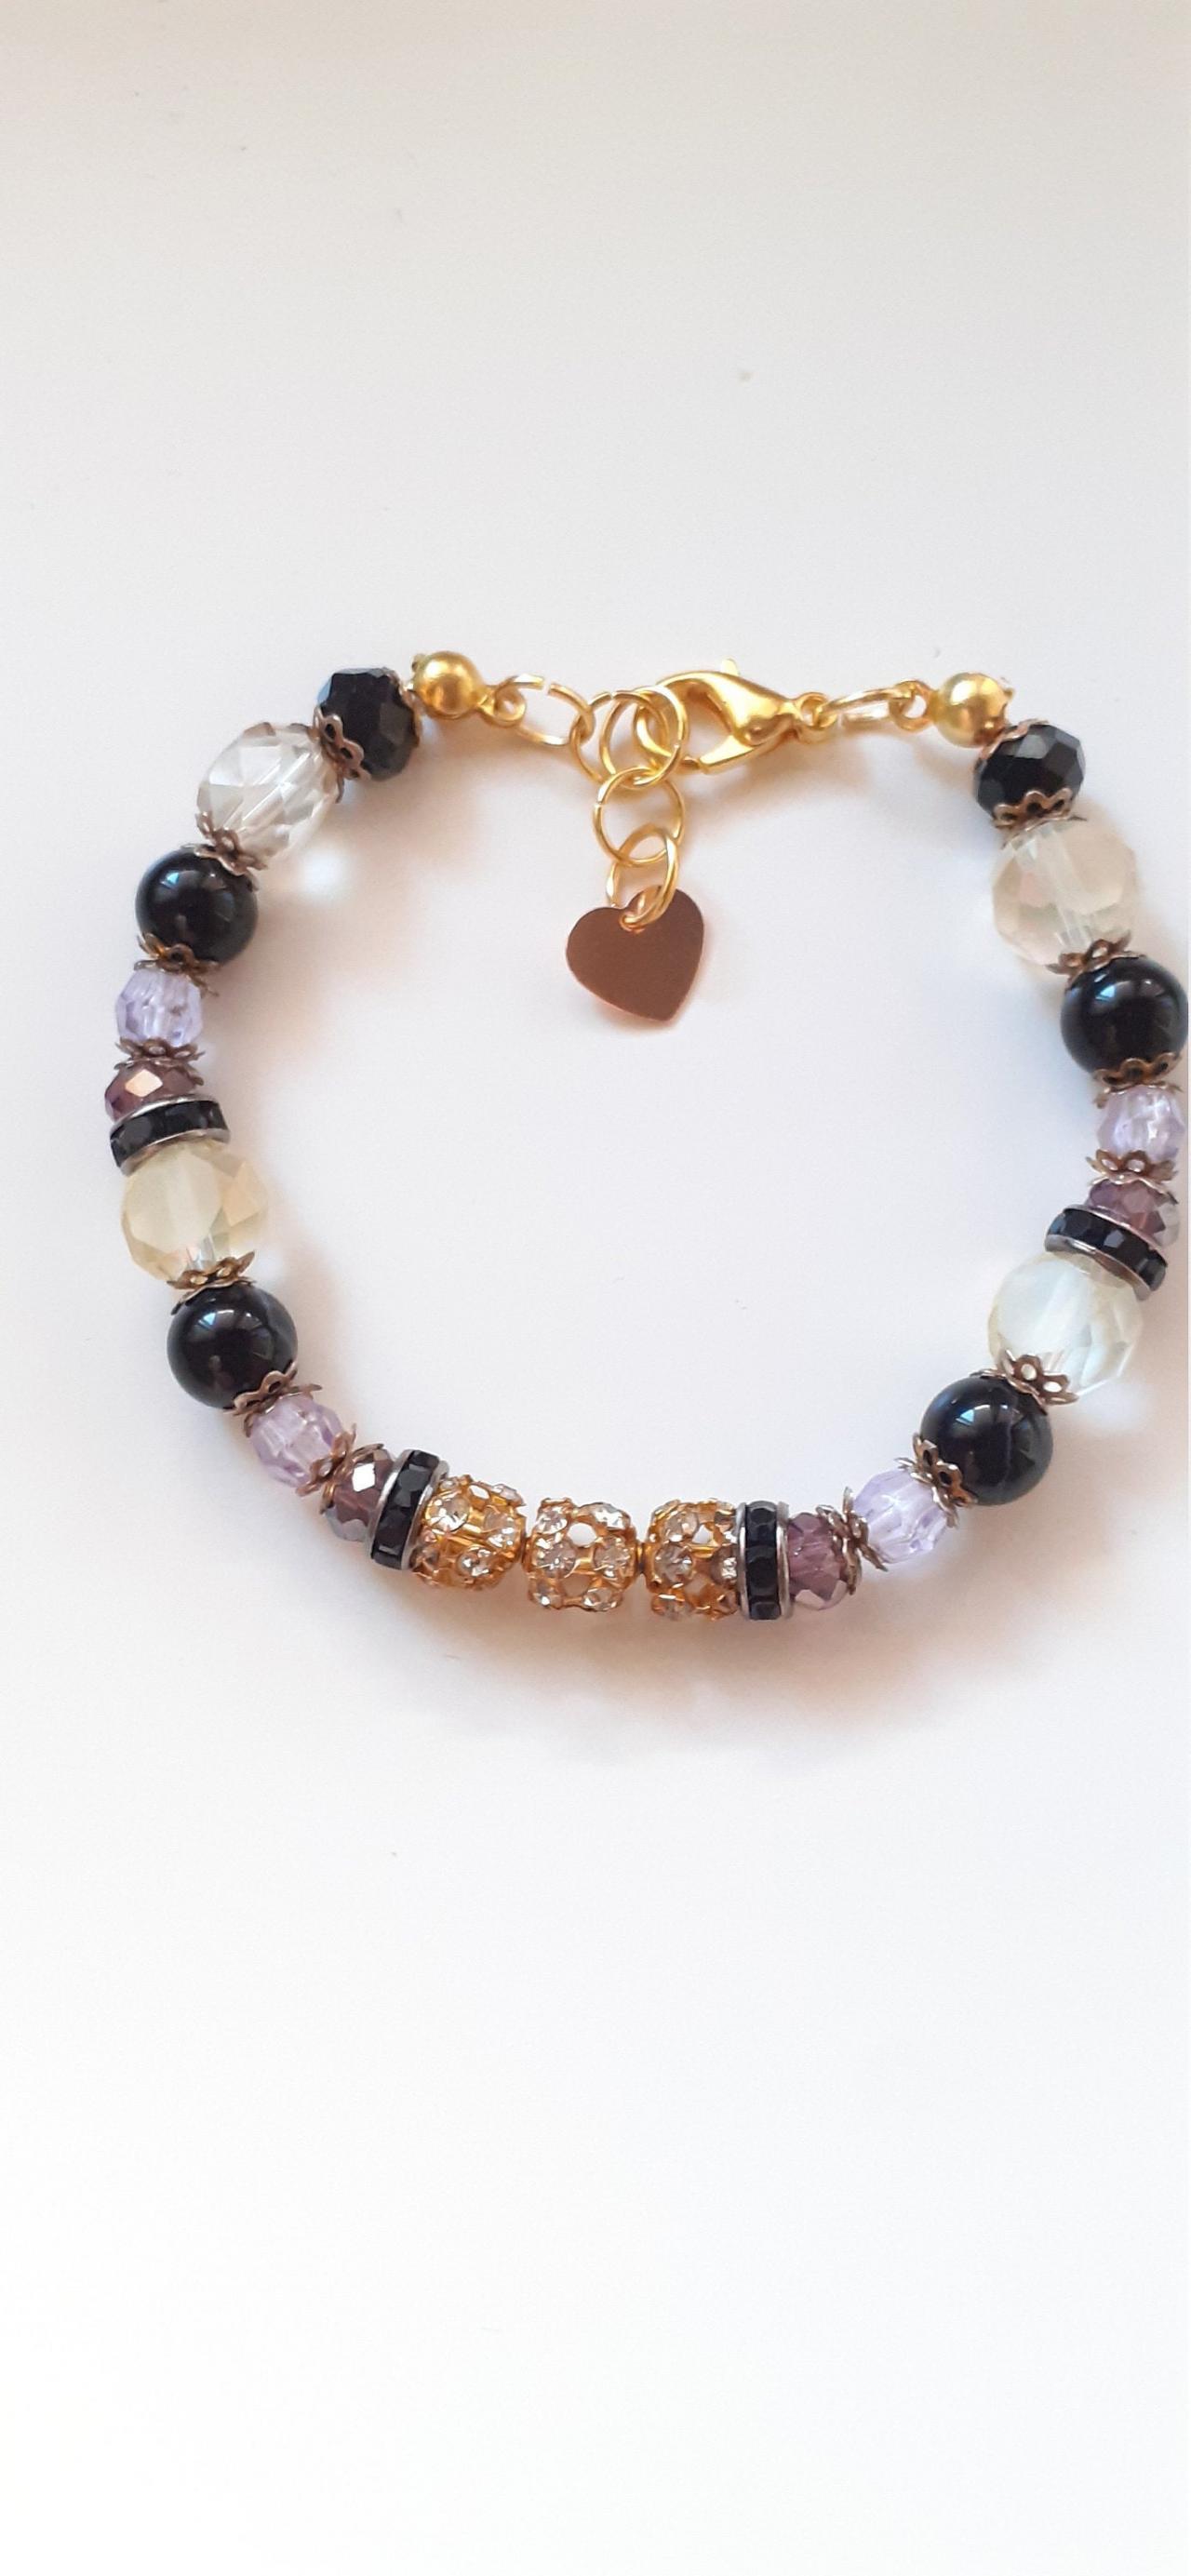 Austrian Crystals Bracelet, Czech Crystals Bracelet, Gemstones Onyx, Love Bracelet, Gift For Friend, Gift For Mother's Day, Gift Ideas